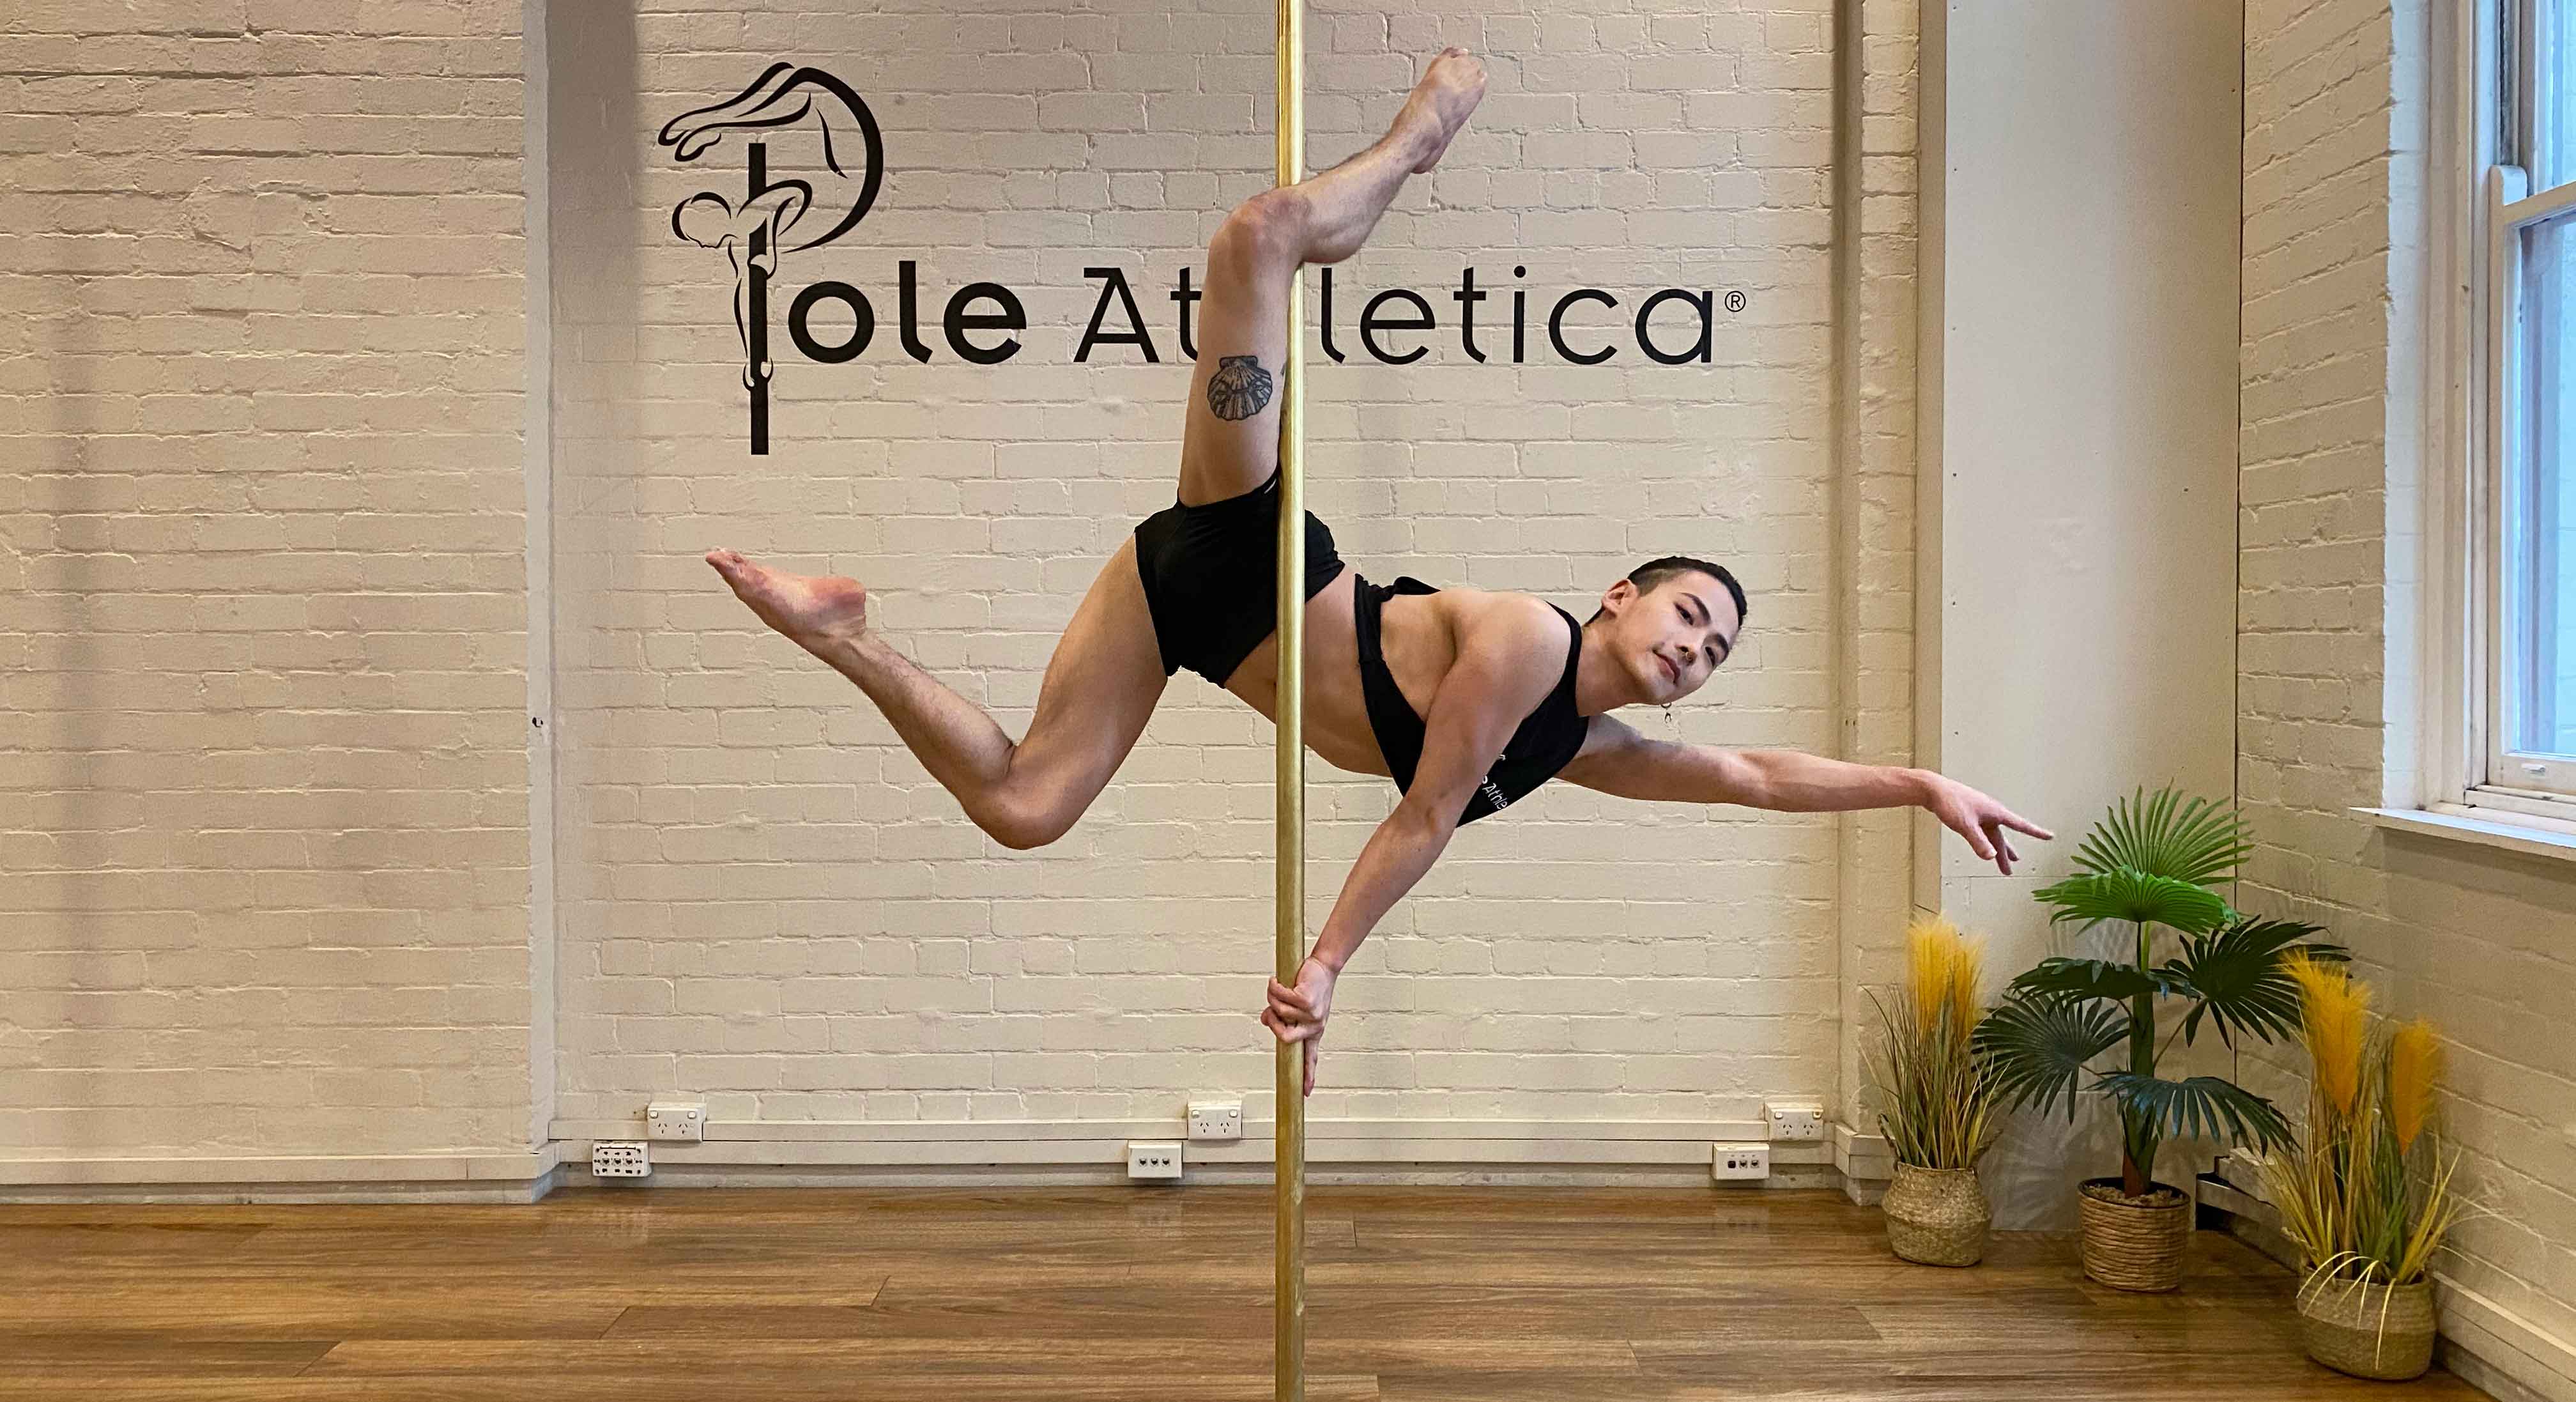 Intermediate Pole Tricks Classes at Pole Athletica